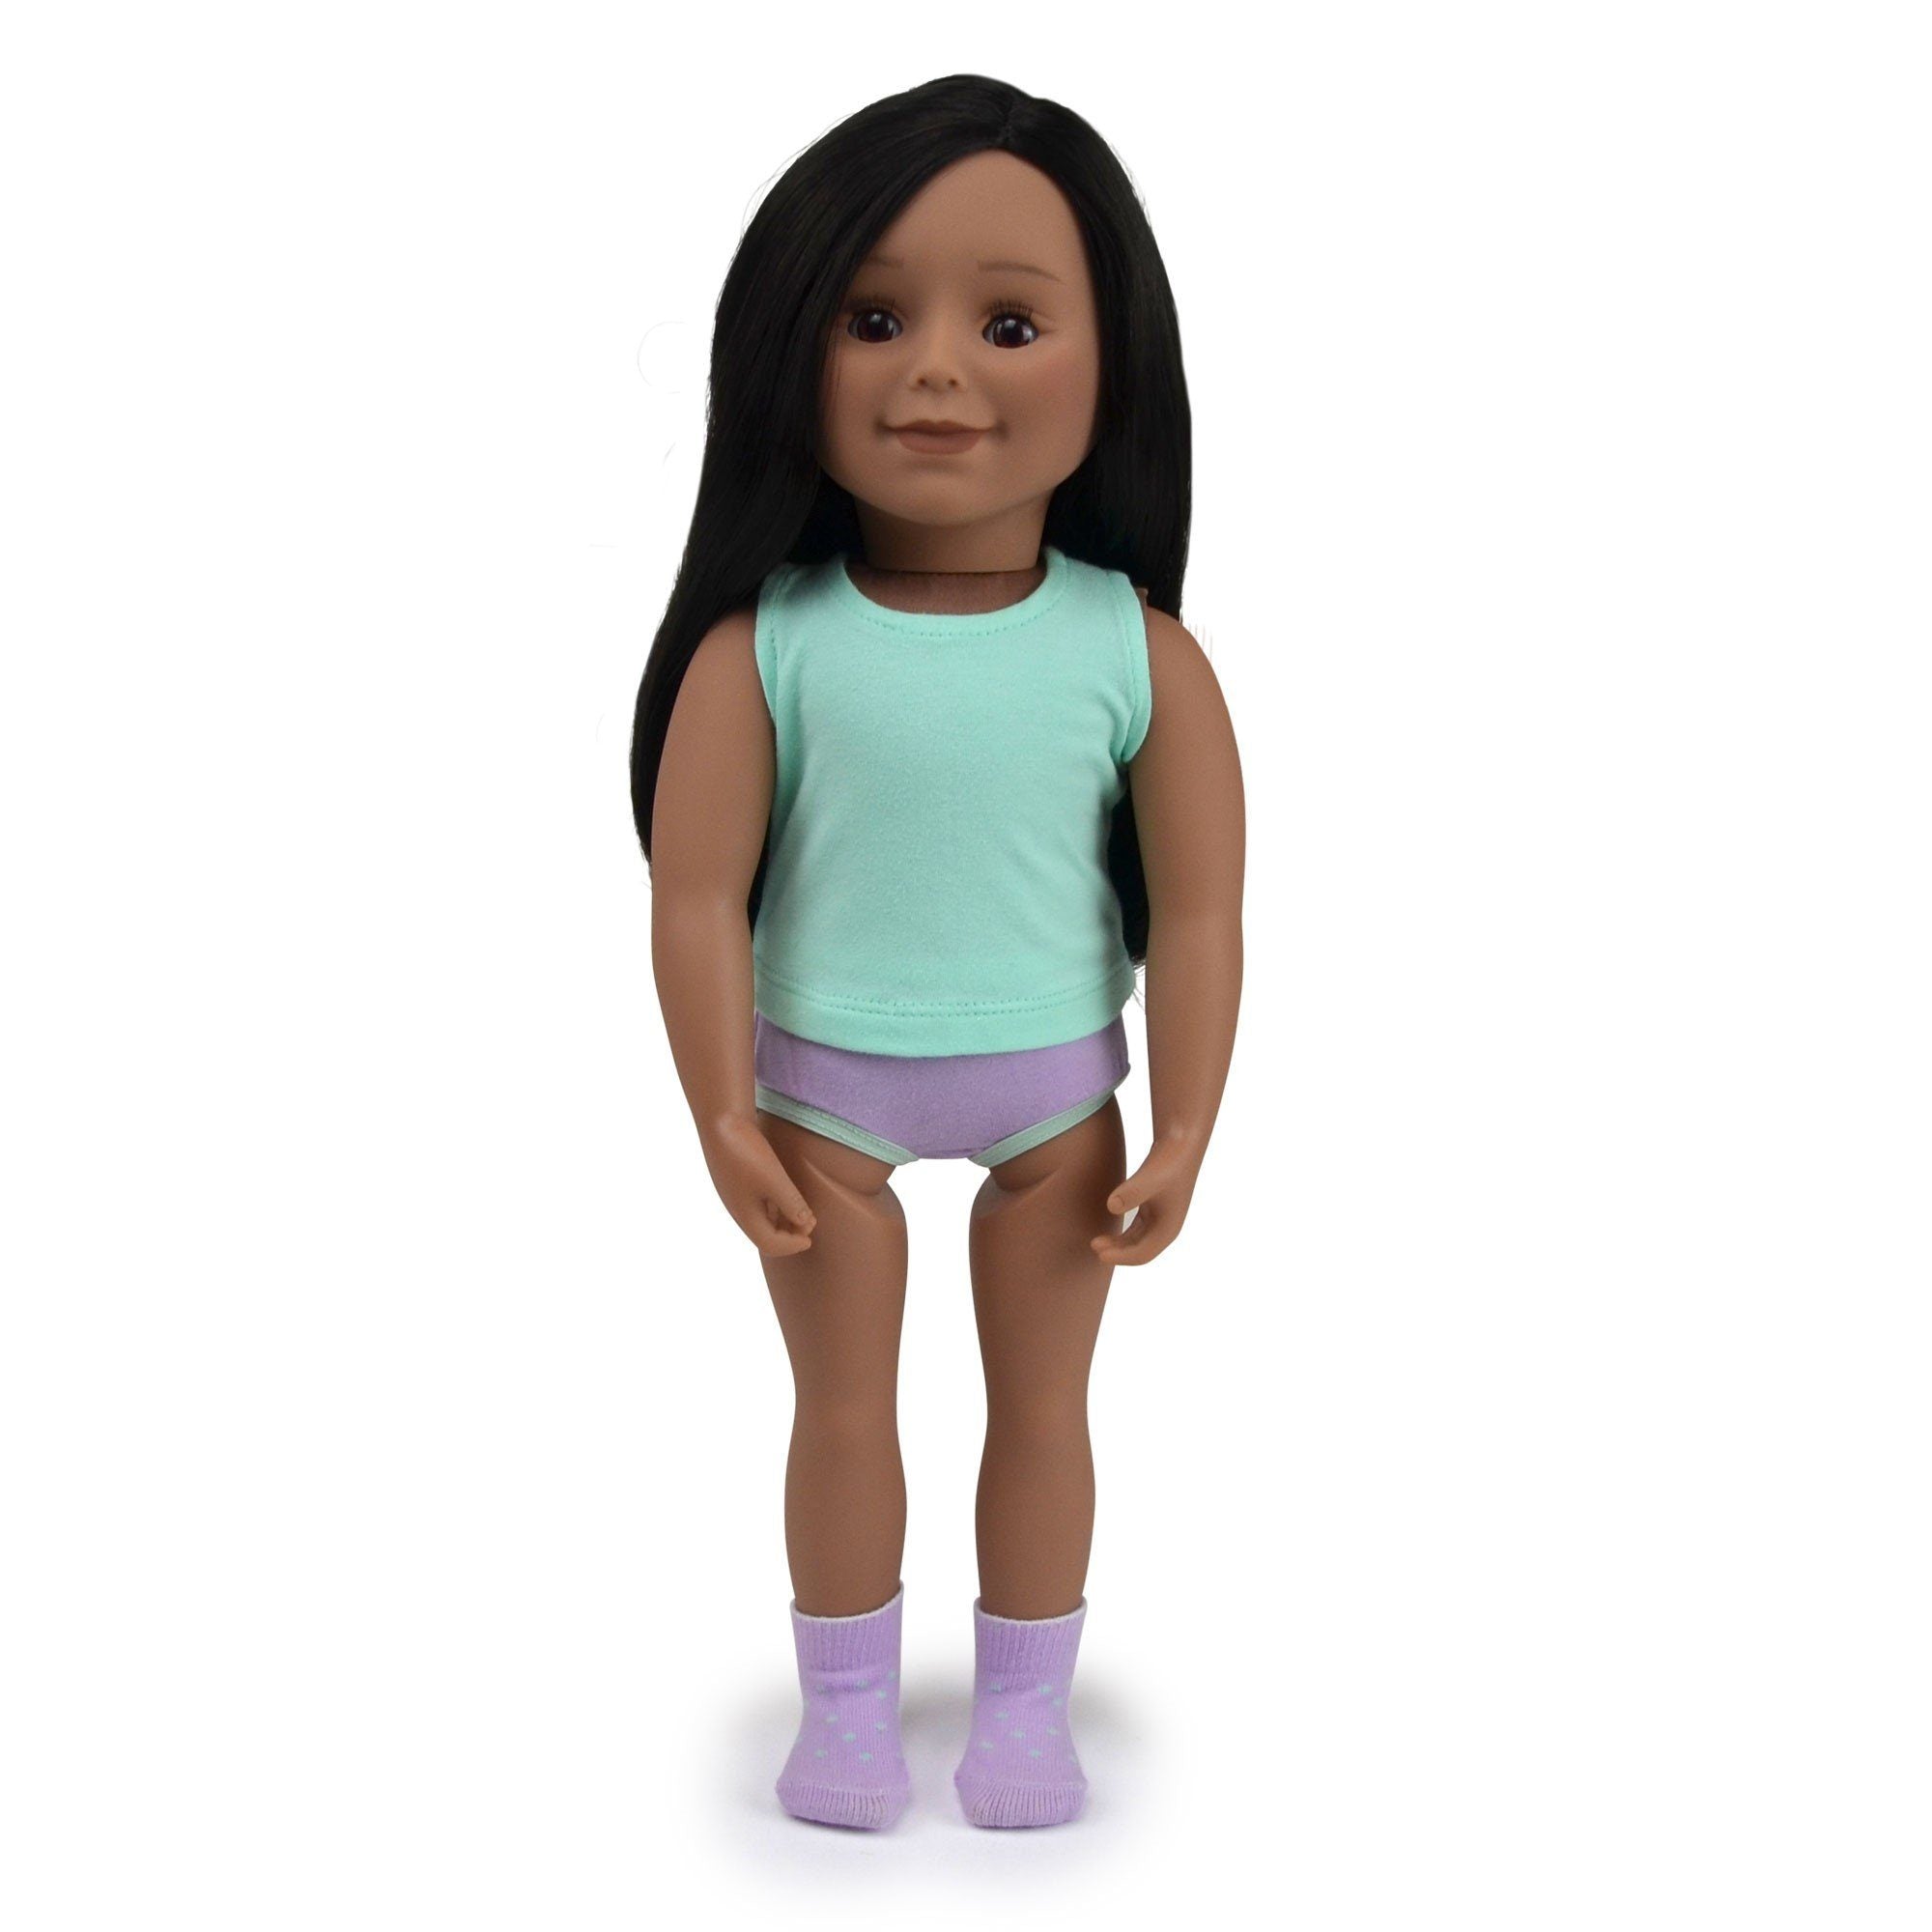 Maplelea  Girls' Essentials Socks, Tank Top and Underwear Set for I8 Inch  Doll